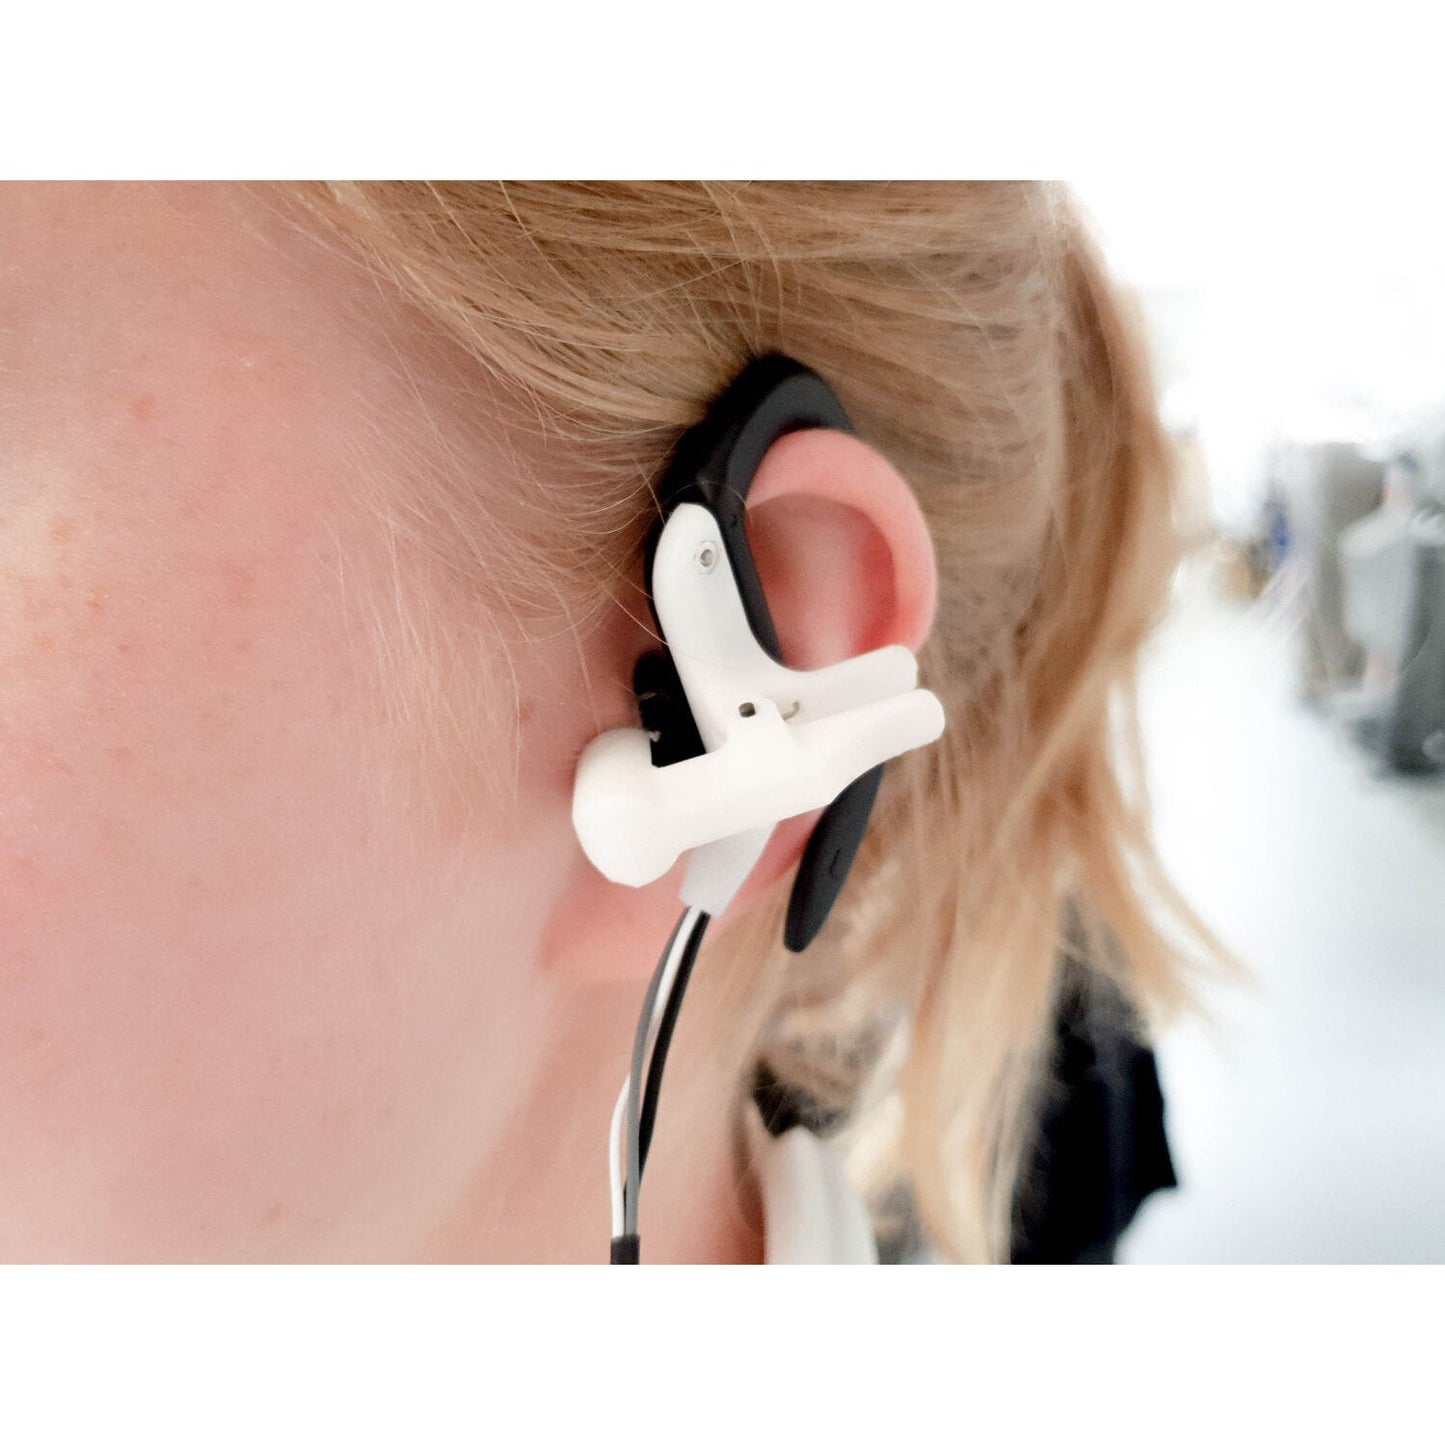 EAR ACUPUNCTURE CLIP ELECTRODE